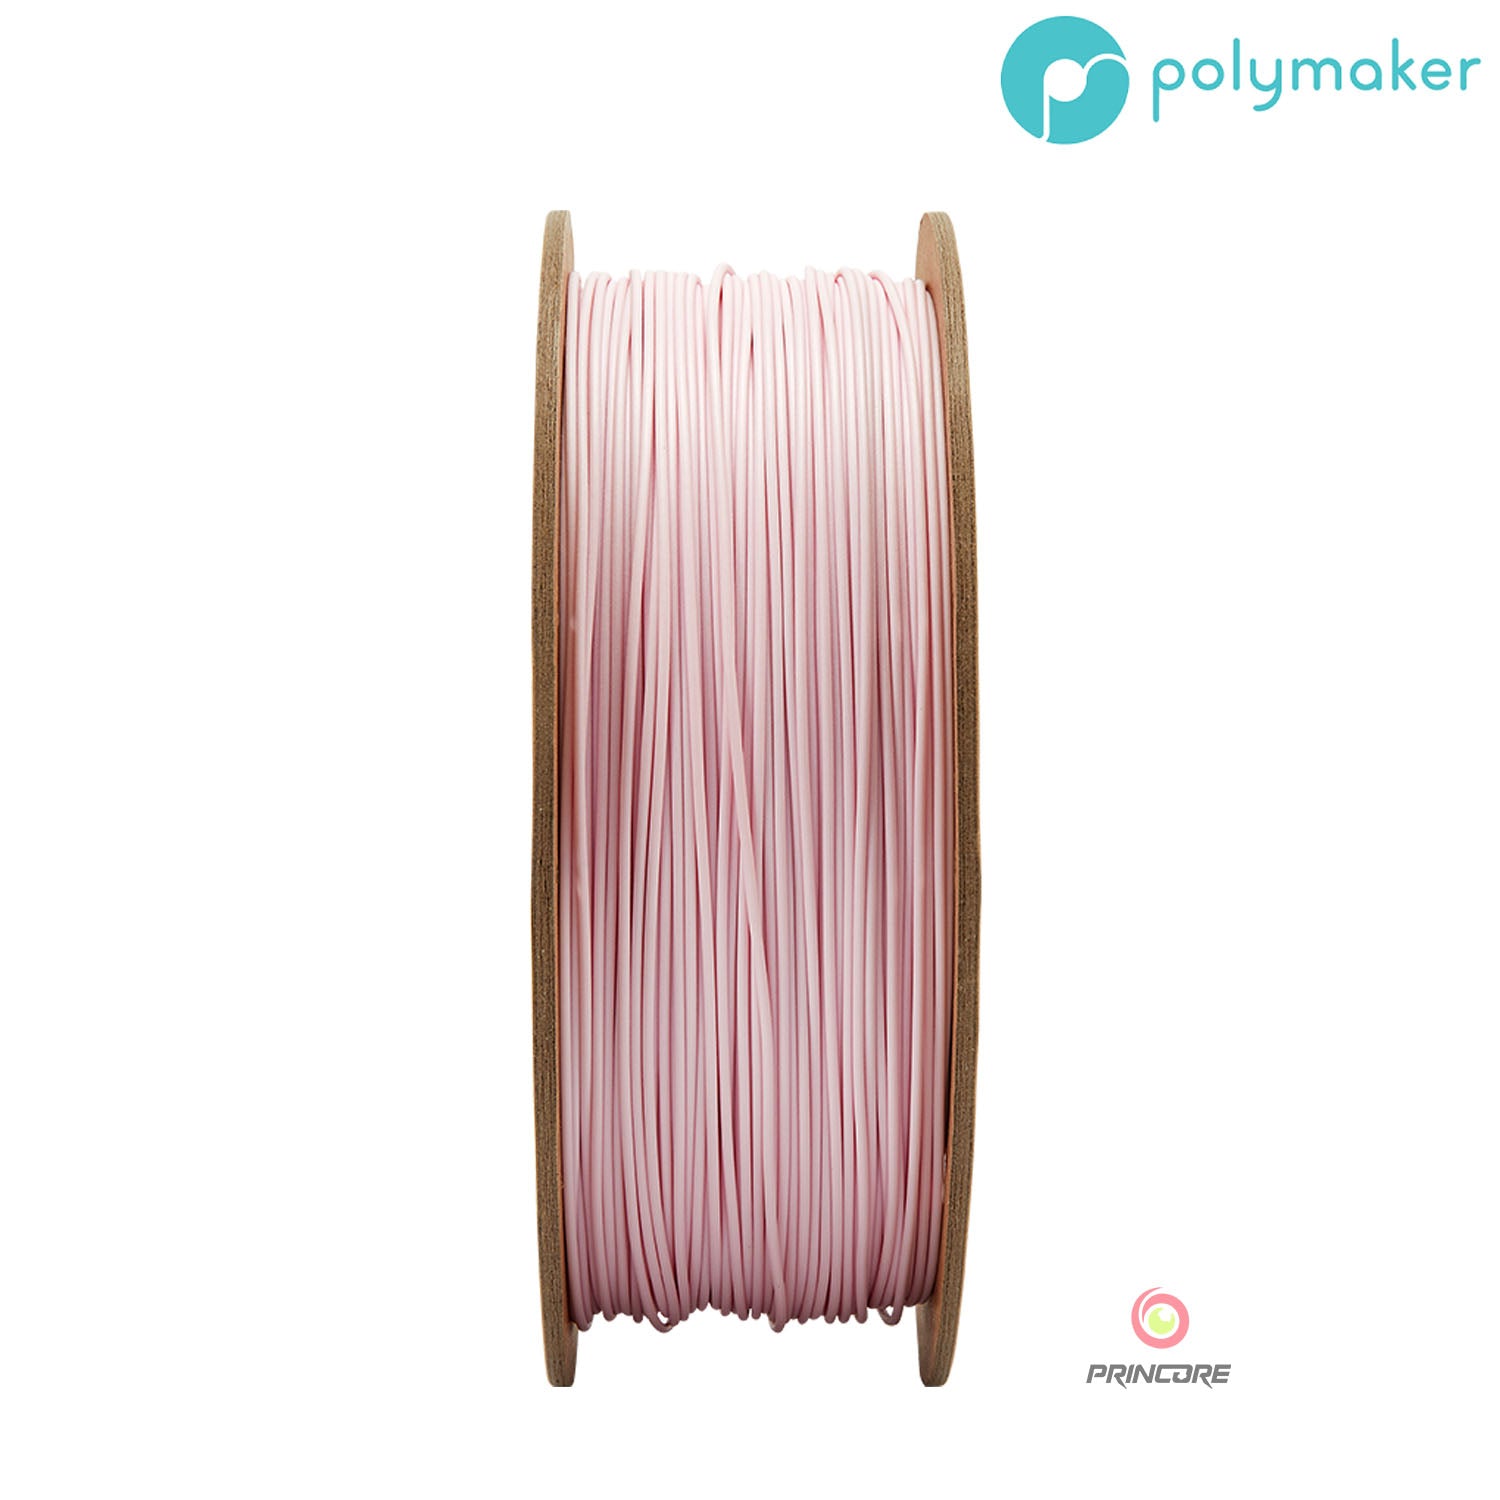 Polymaker PolyTerra™ PLA - Candy [1.75mm] (19,90€/Kg)